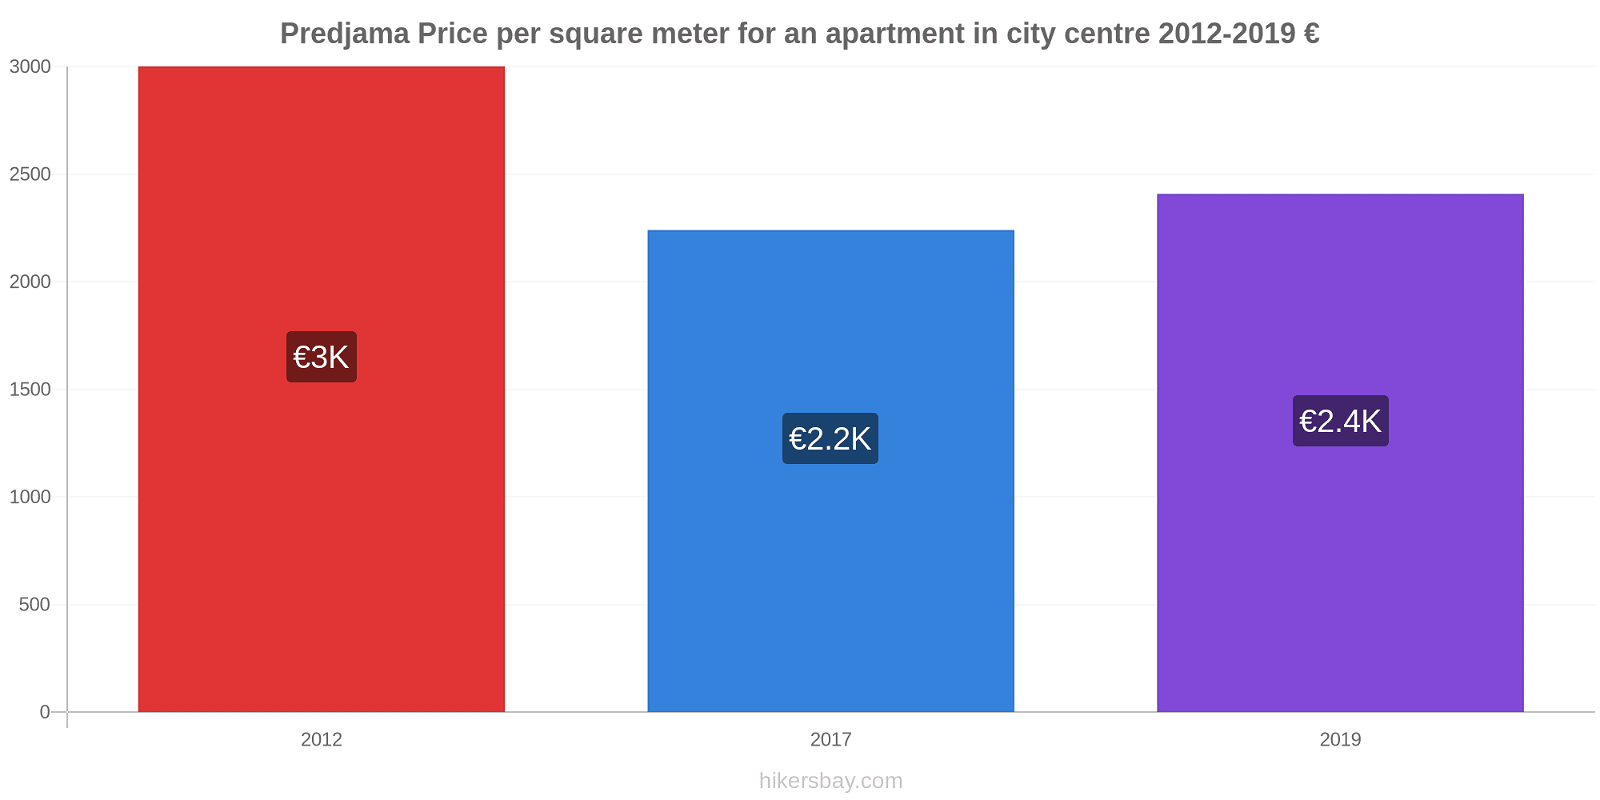 Predjama price changes Price per square meter for an apartment in city centre hikersbay.com